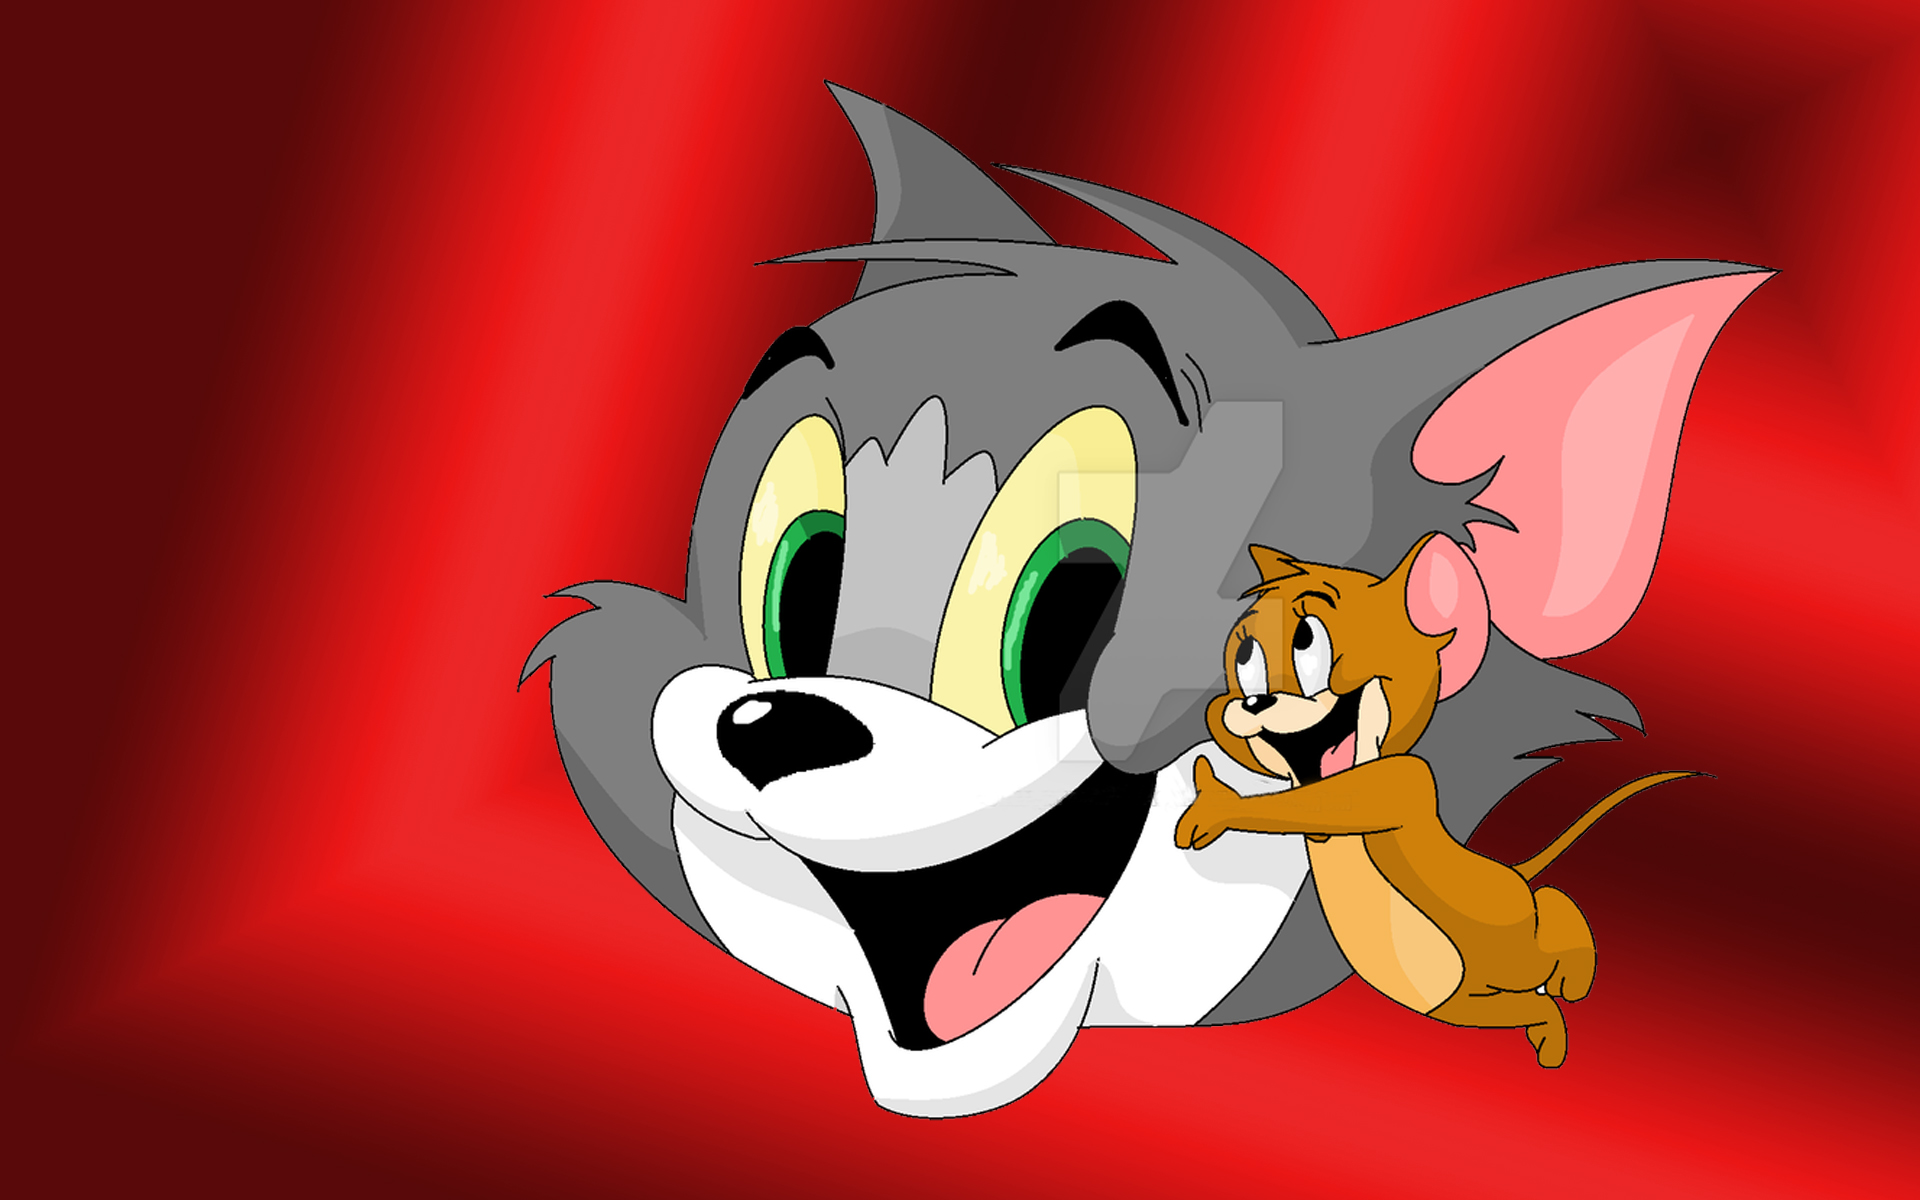 Jerry том и джерри. Tom and Jerry. Tom and Jerry cartoon.